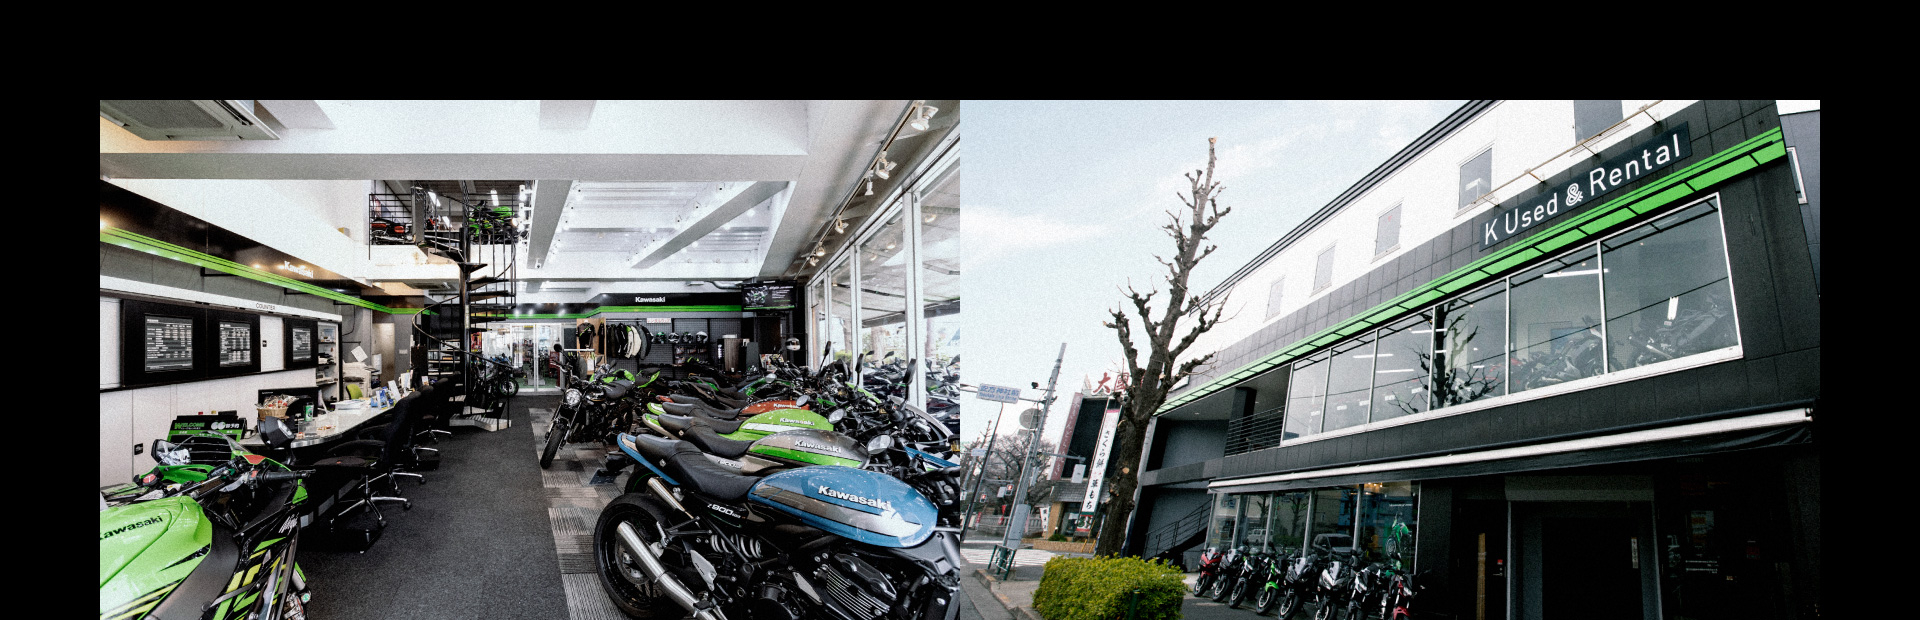 Kawasaki レンタルバイク・中古車販売専門店「K Used & Rental TOKYO」04